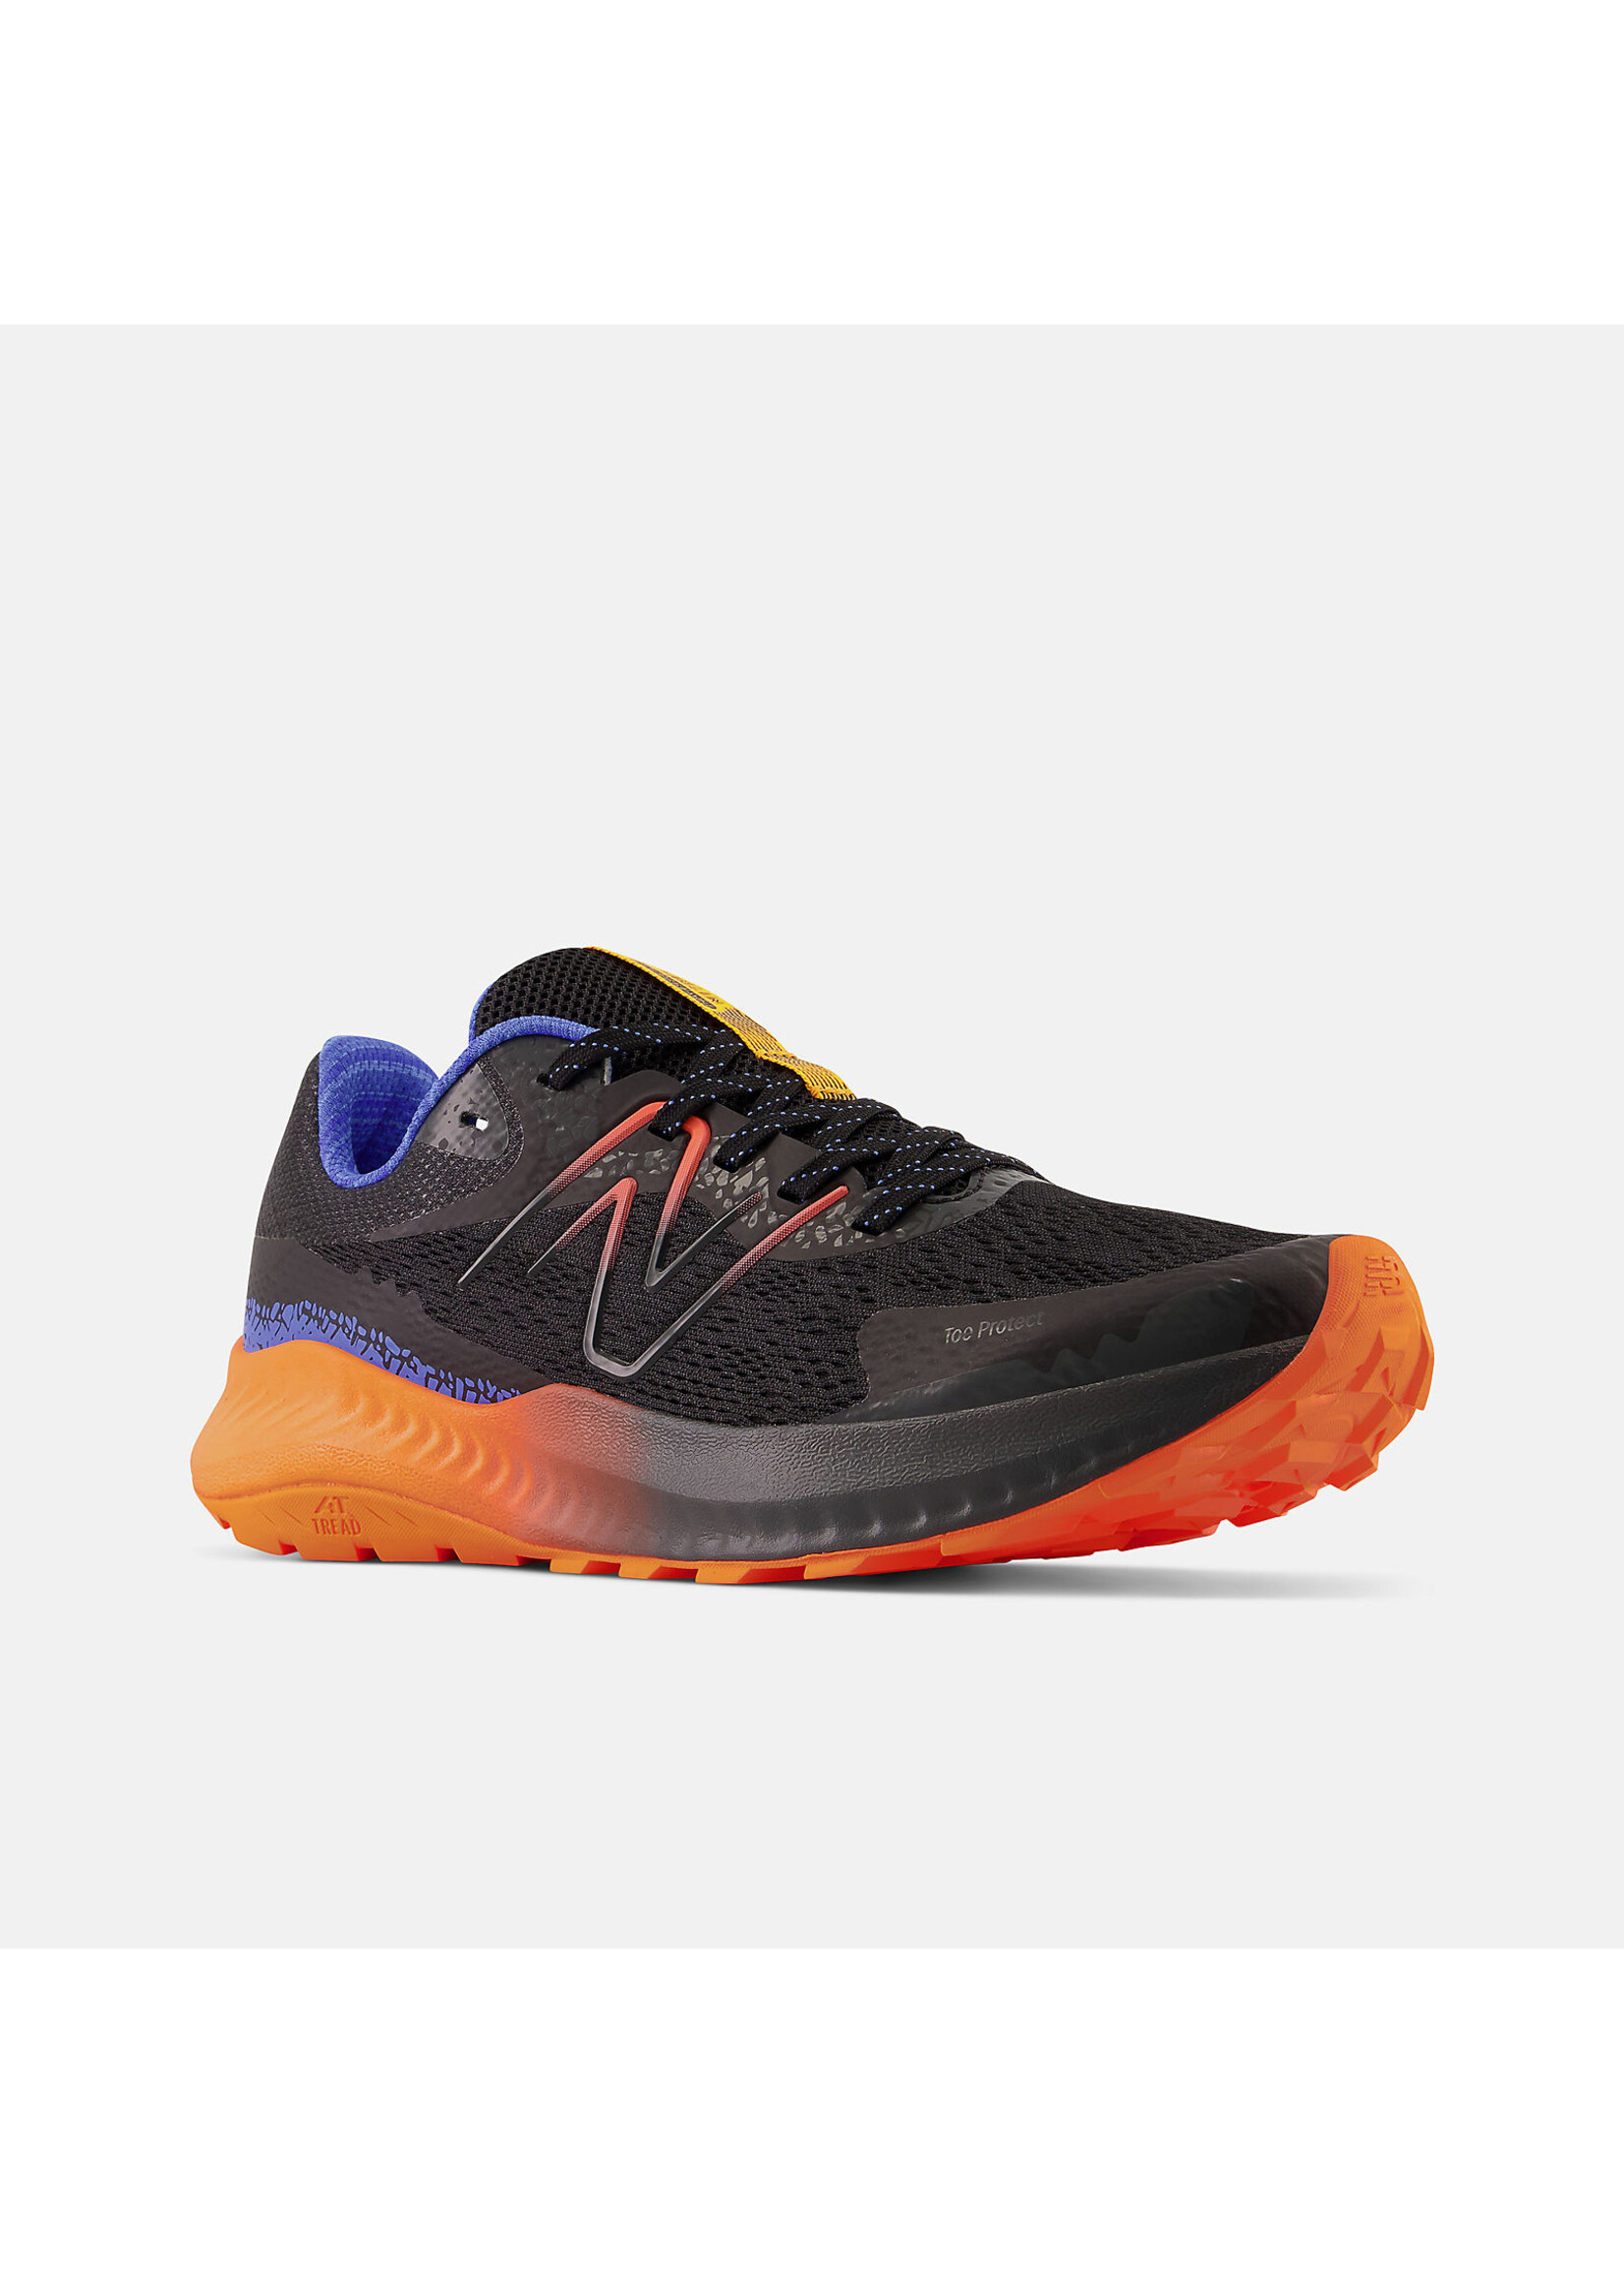 New Balance New Balance Nitrel V5 Men’s Trail Running Shoes, Black/Orange/Blue